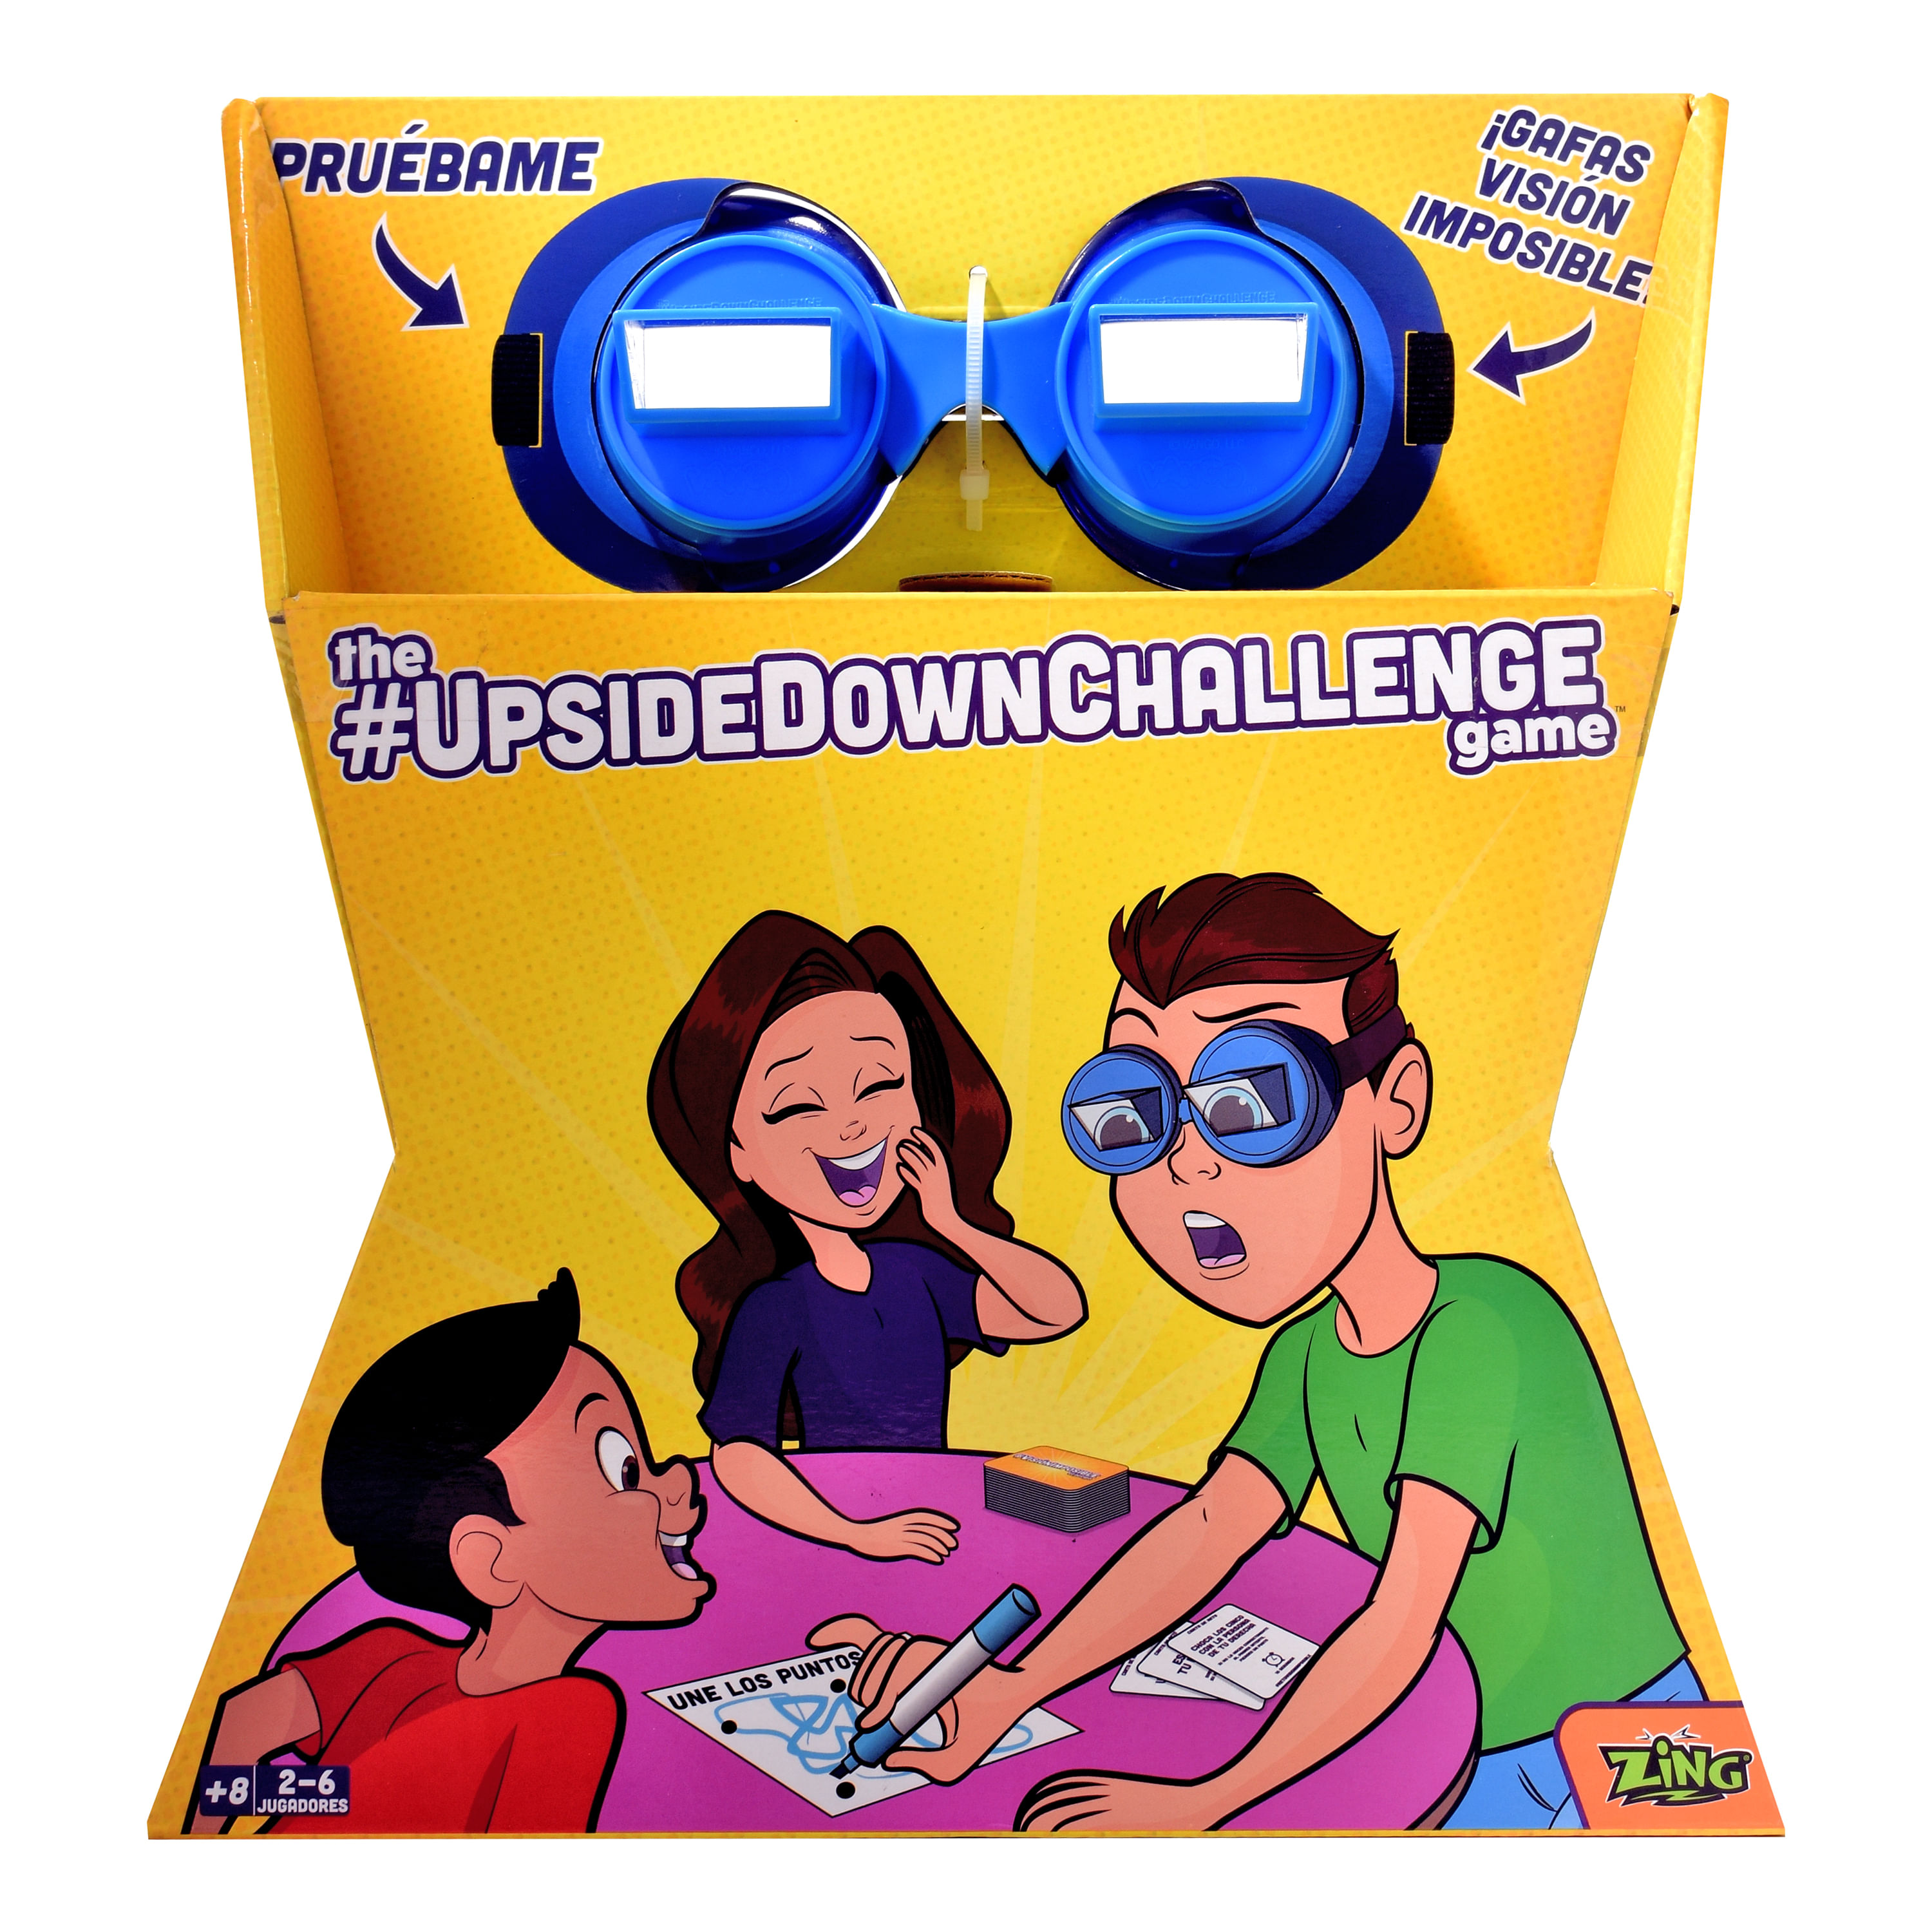 Comprar Upside Down Challenge Juego